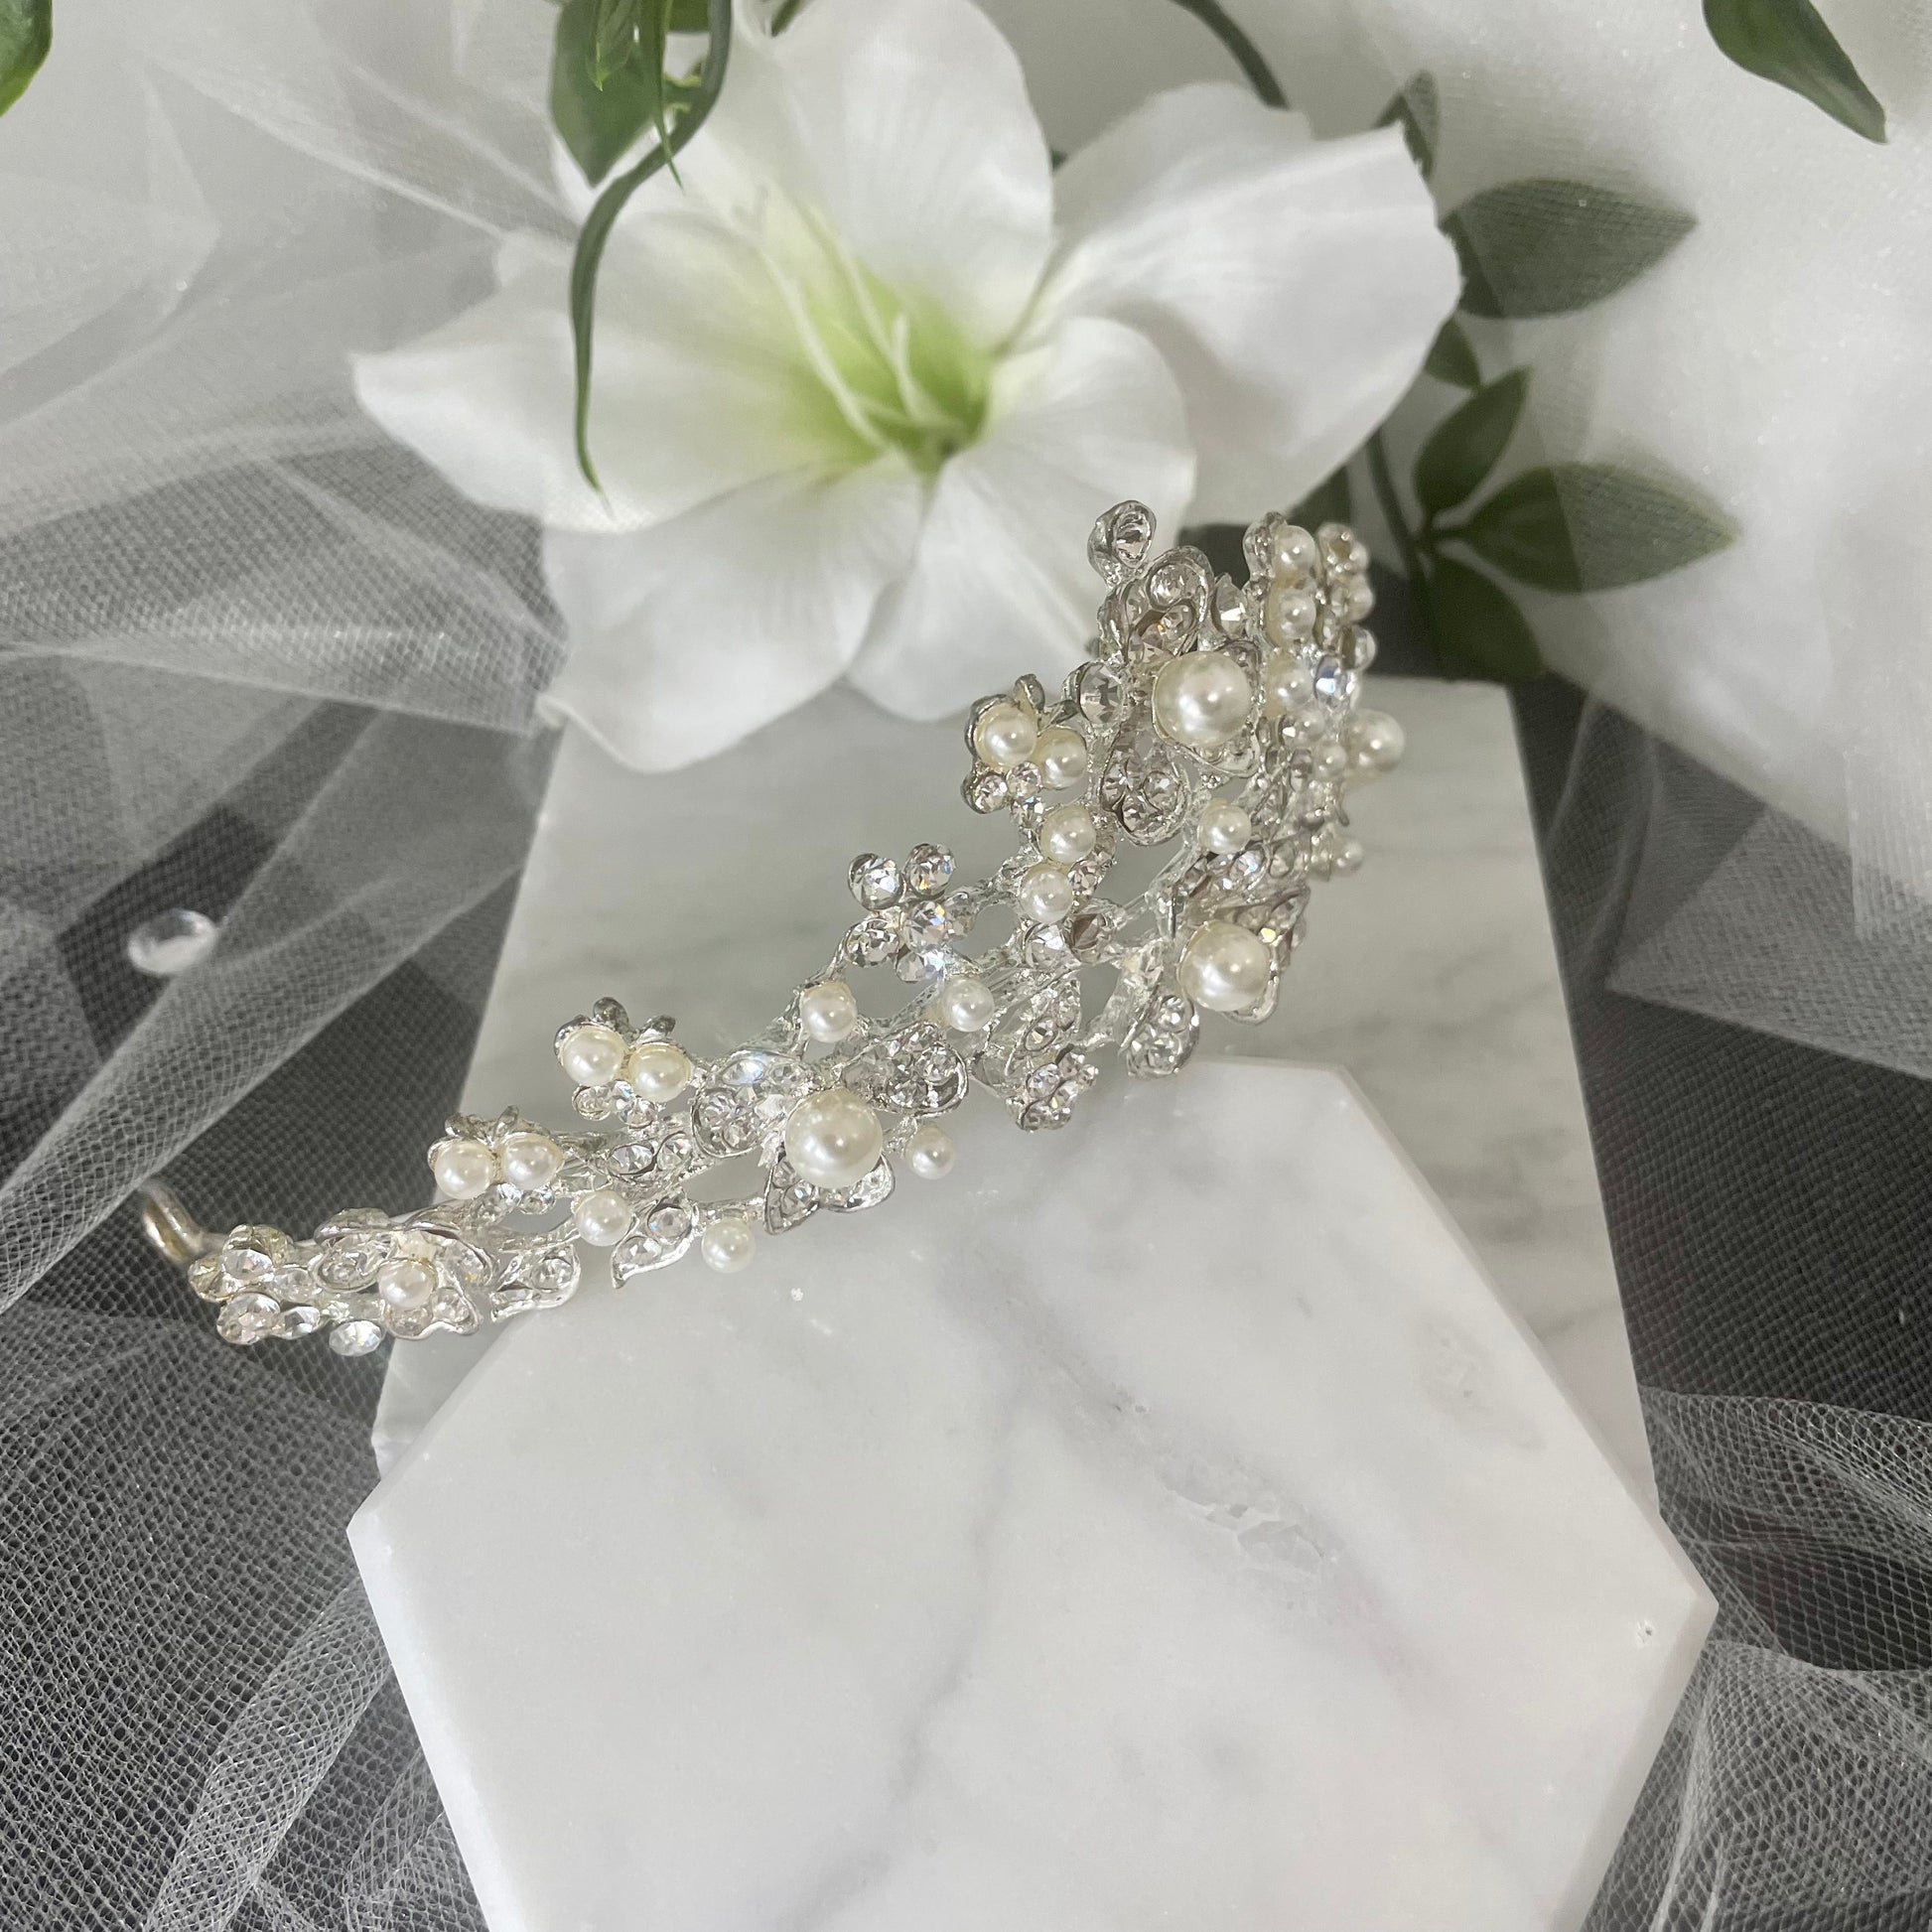 Rosita Bridal Tiara - Exquisite Floral Design for a Radiant Wedding Day Look.